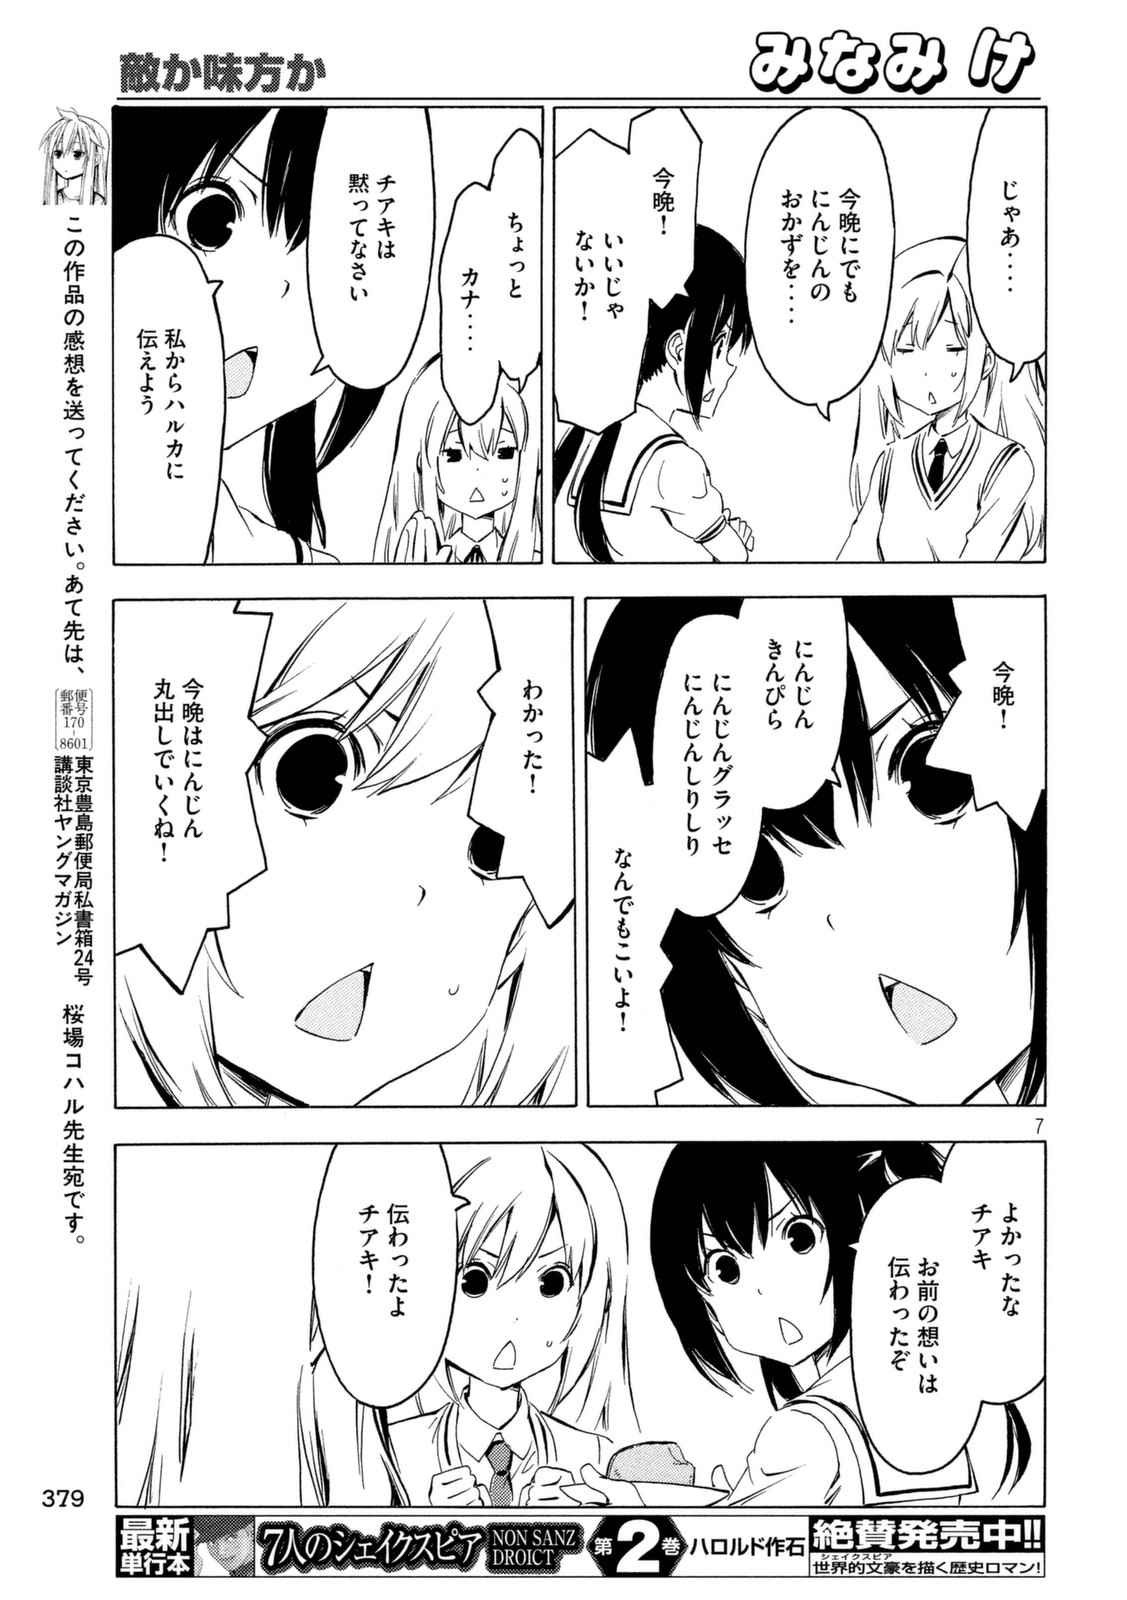 Minami-ke - Chapter 321 - Page 7